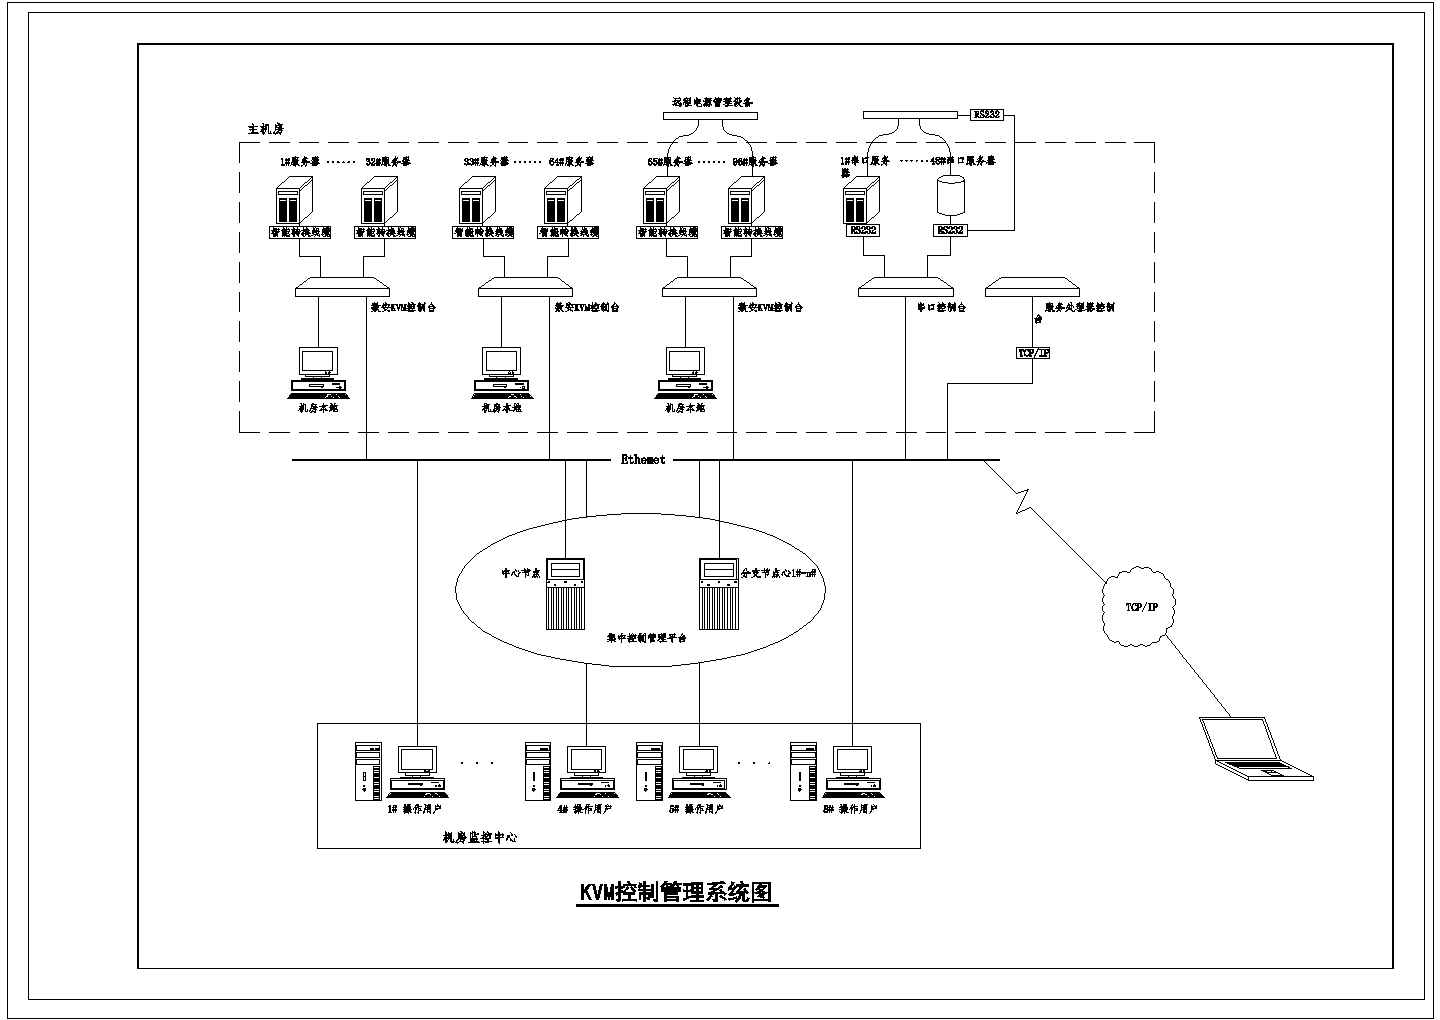 KVM控制管理系统图（09DX009图集41页电子版描图）